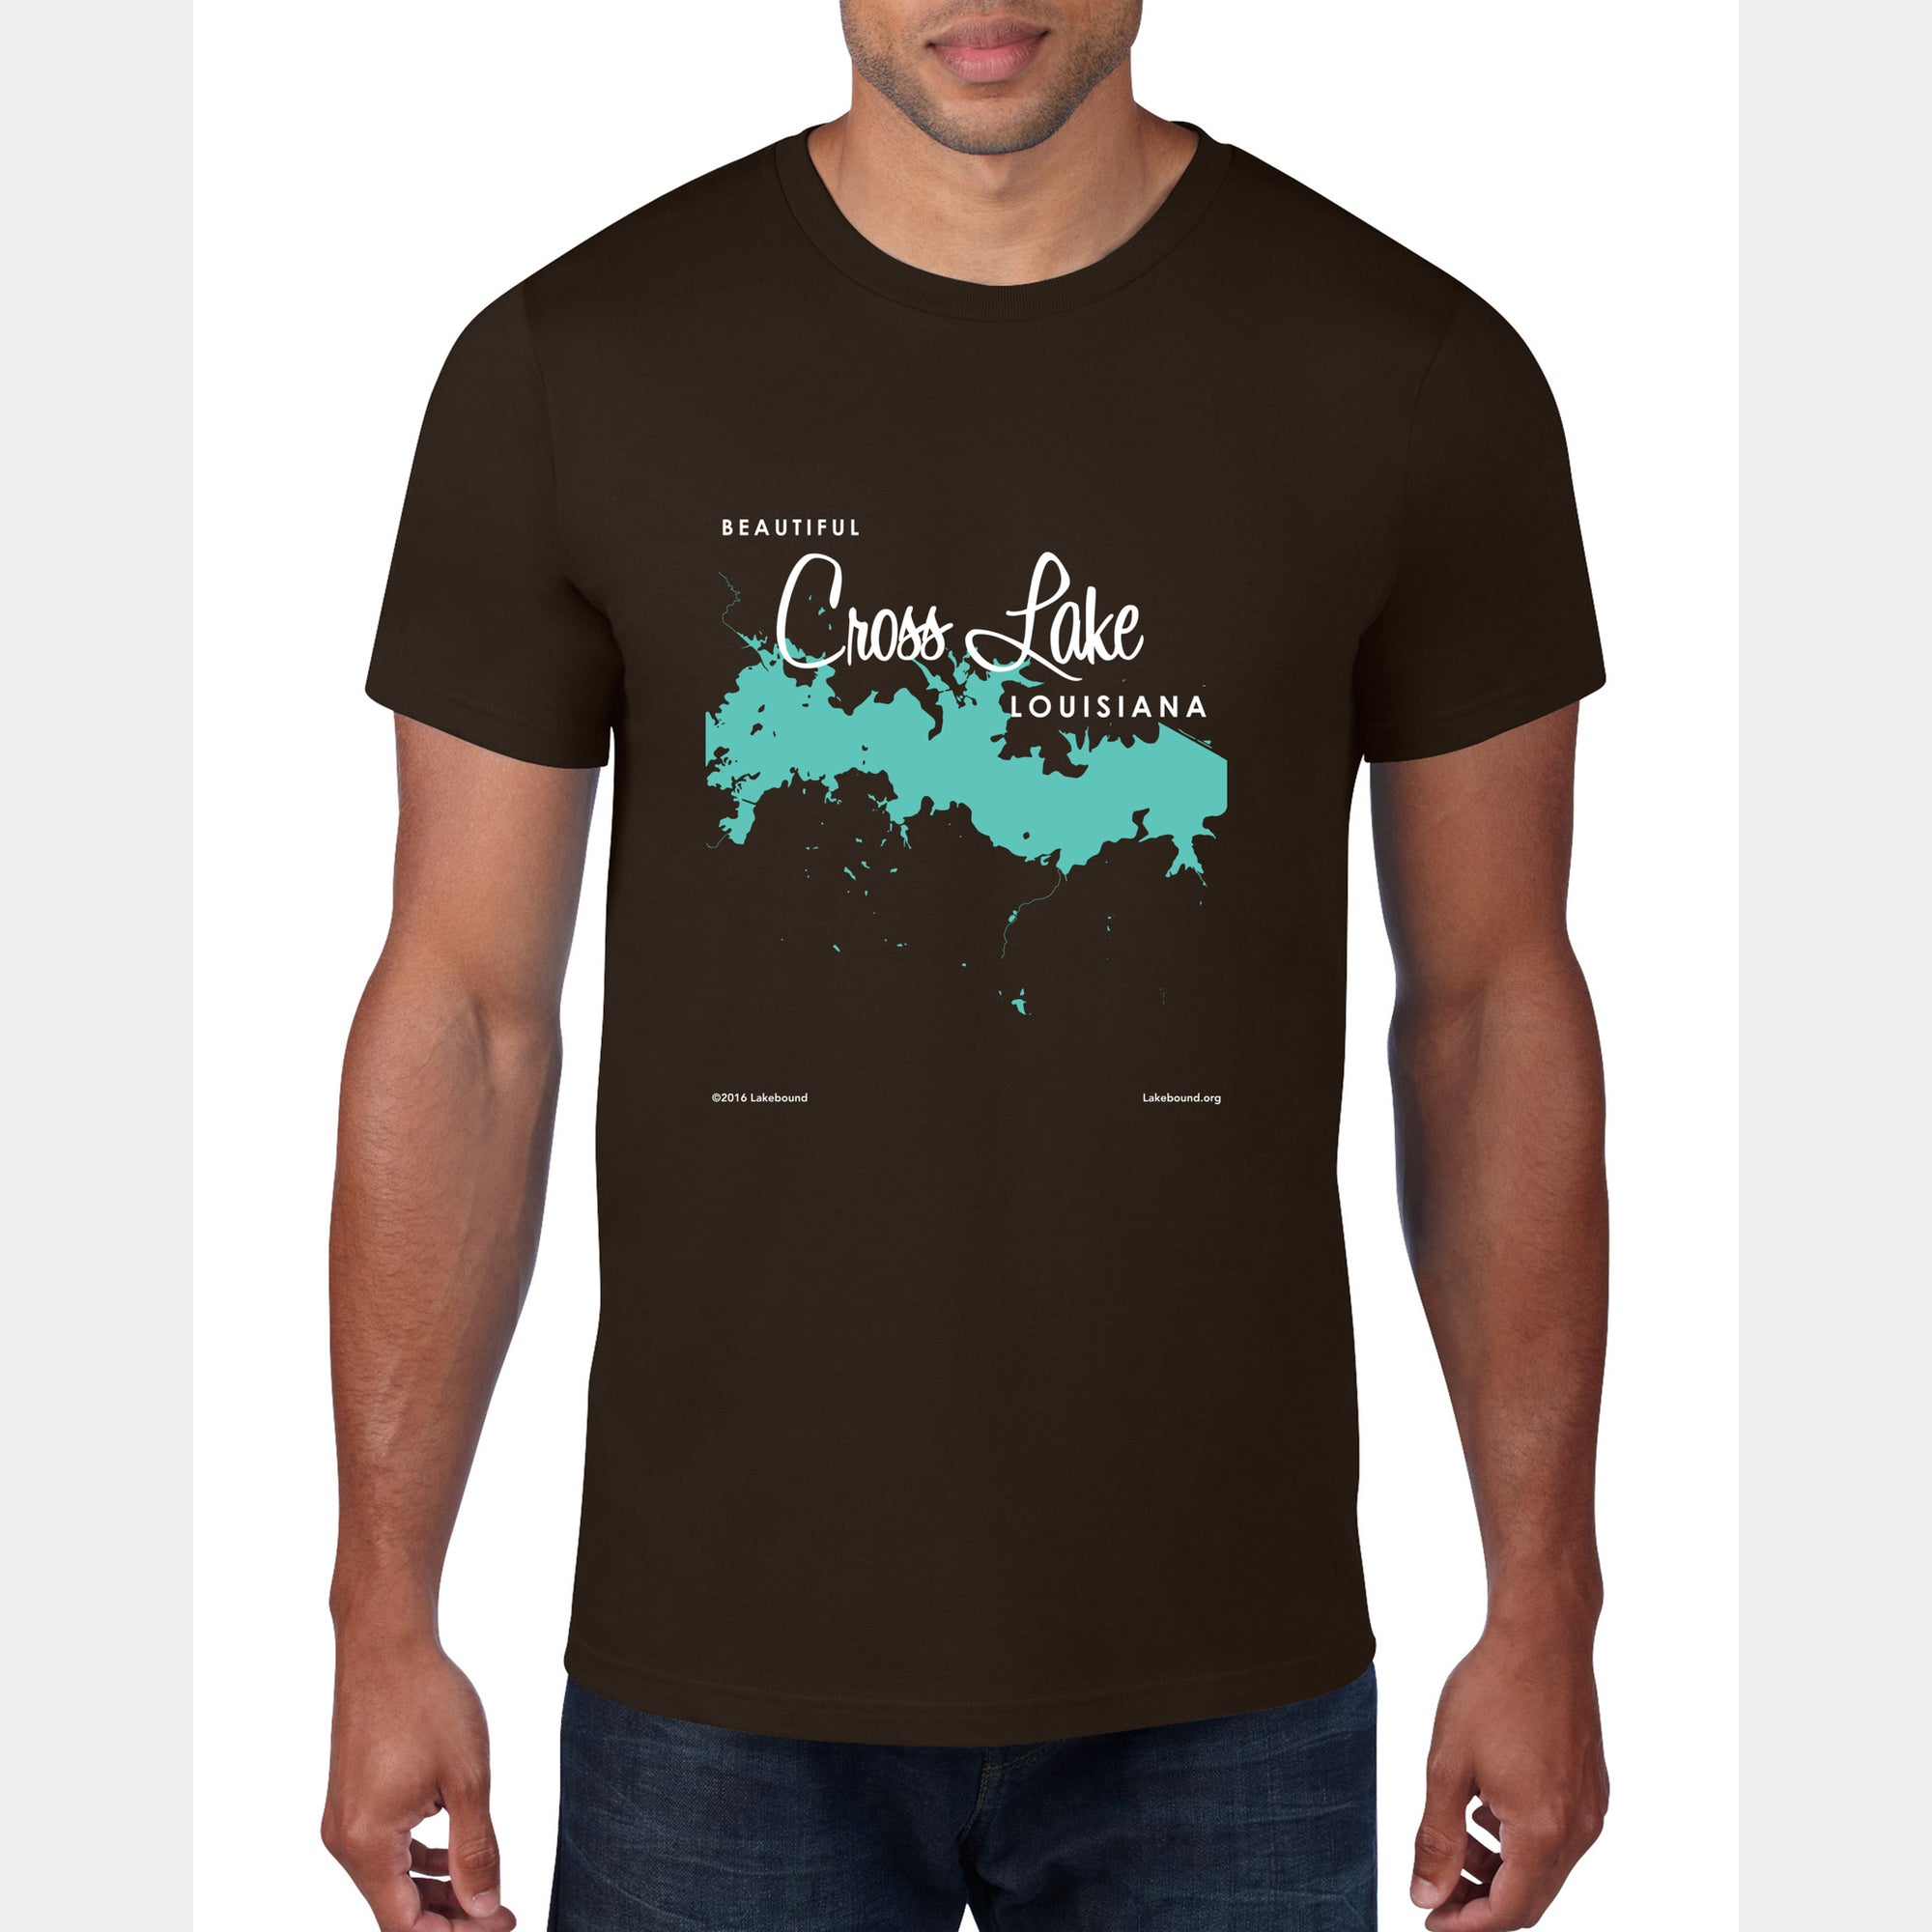 Cross Lake Louisiana, T-Shirt Large / Dark Heather Grey